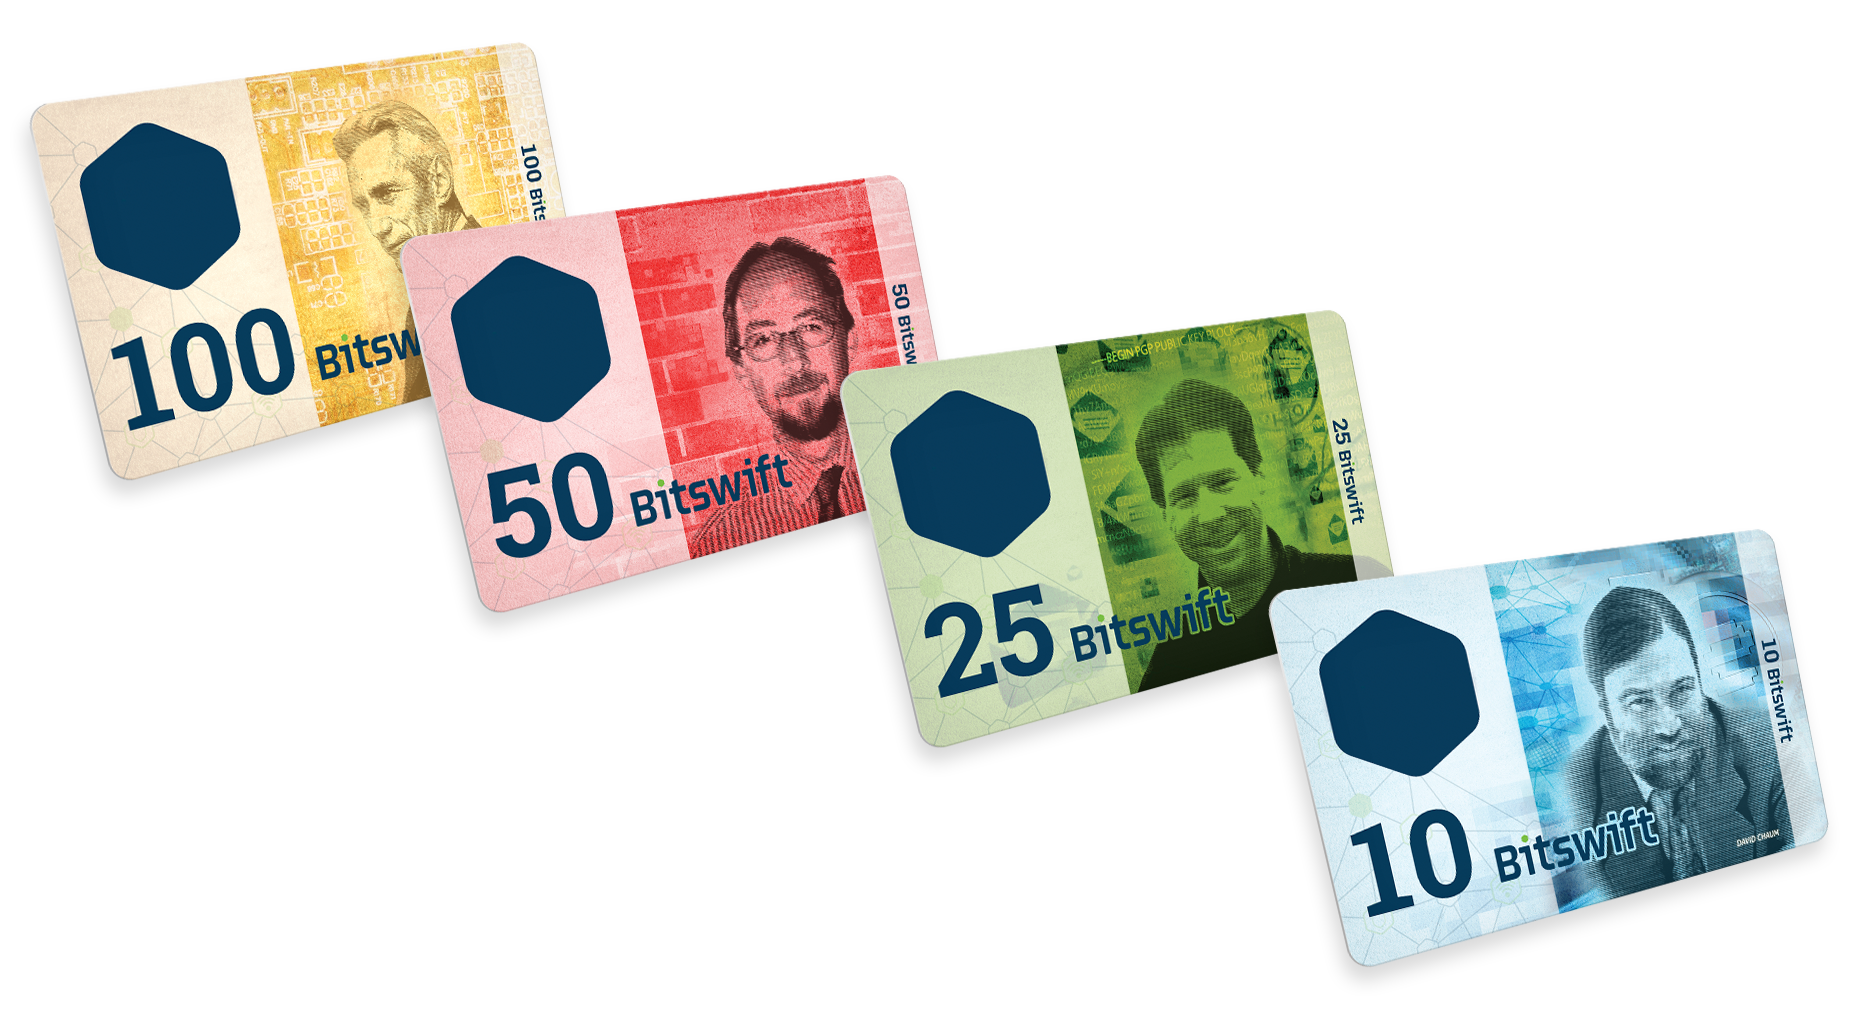 Bitswift cards